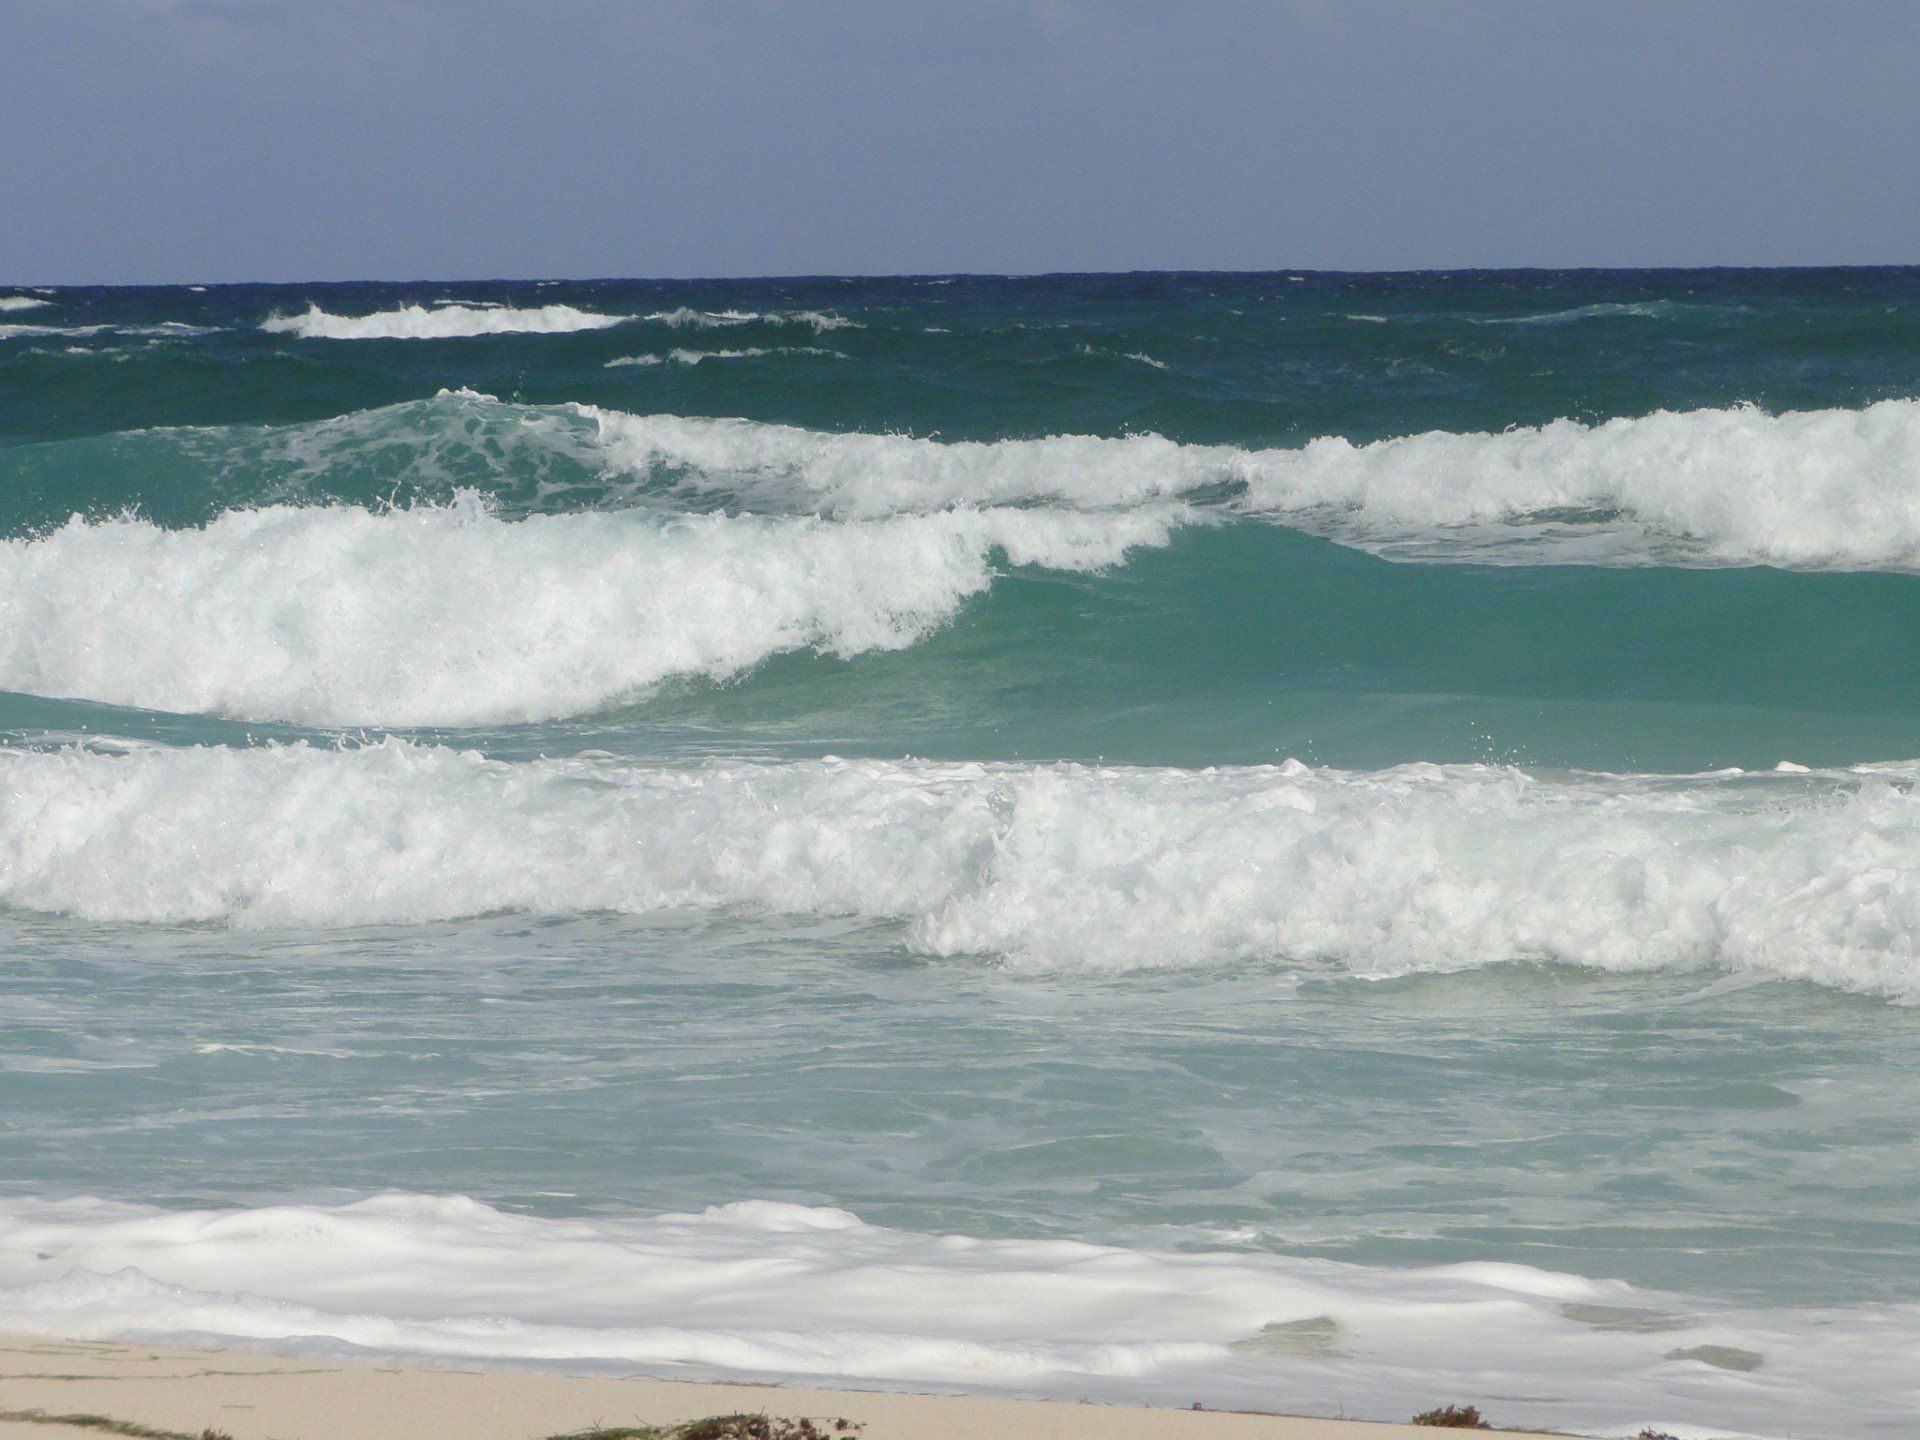 Large waves at Tampalam beach in the Sian Ka'an